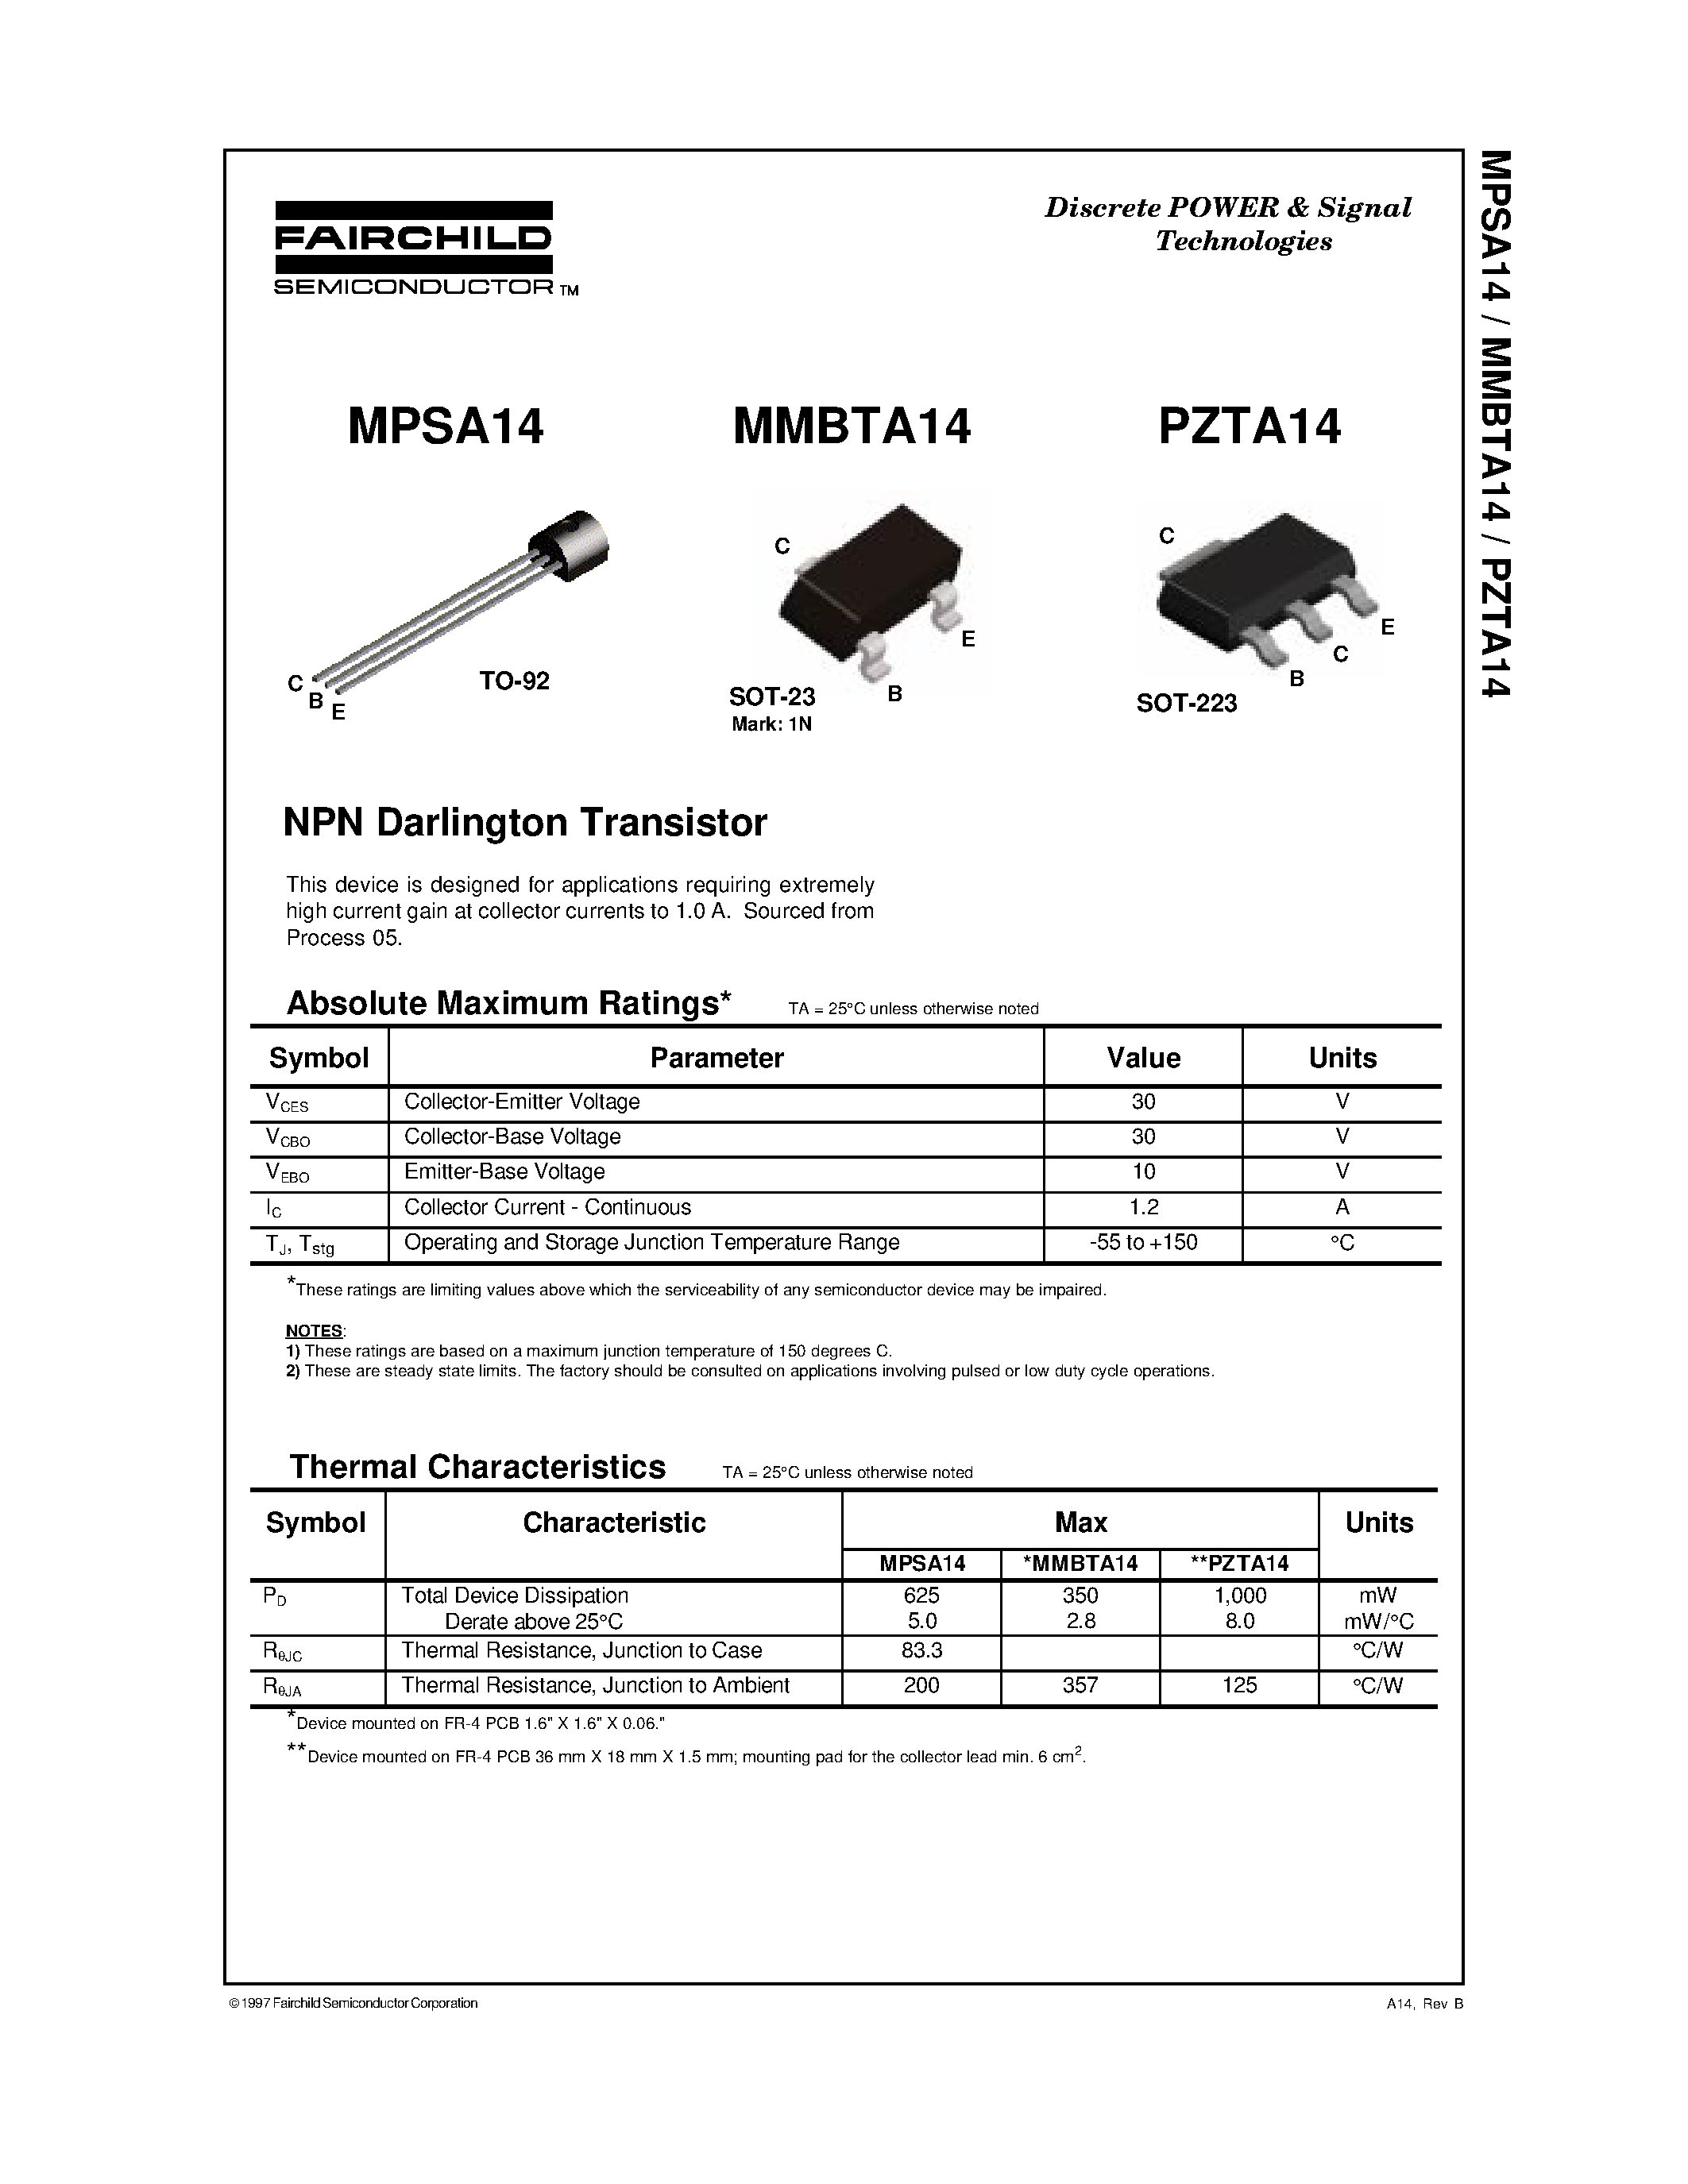 Datasheet PZTA14 - NPN Darlington Transistor page 1